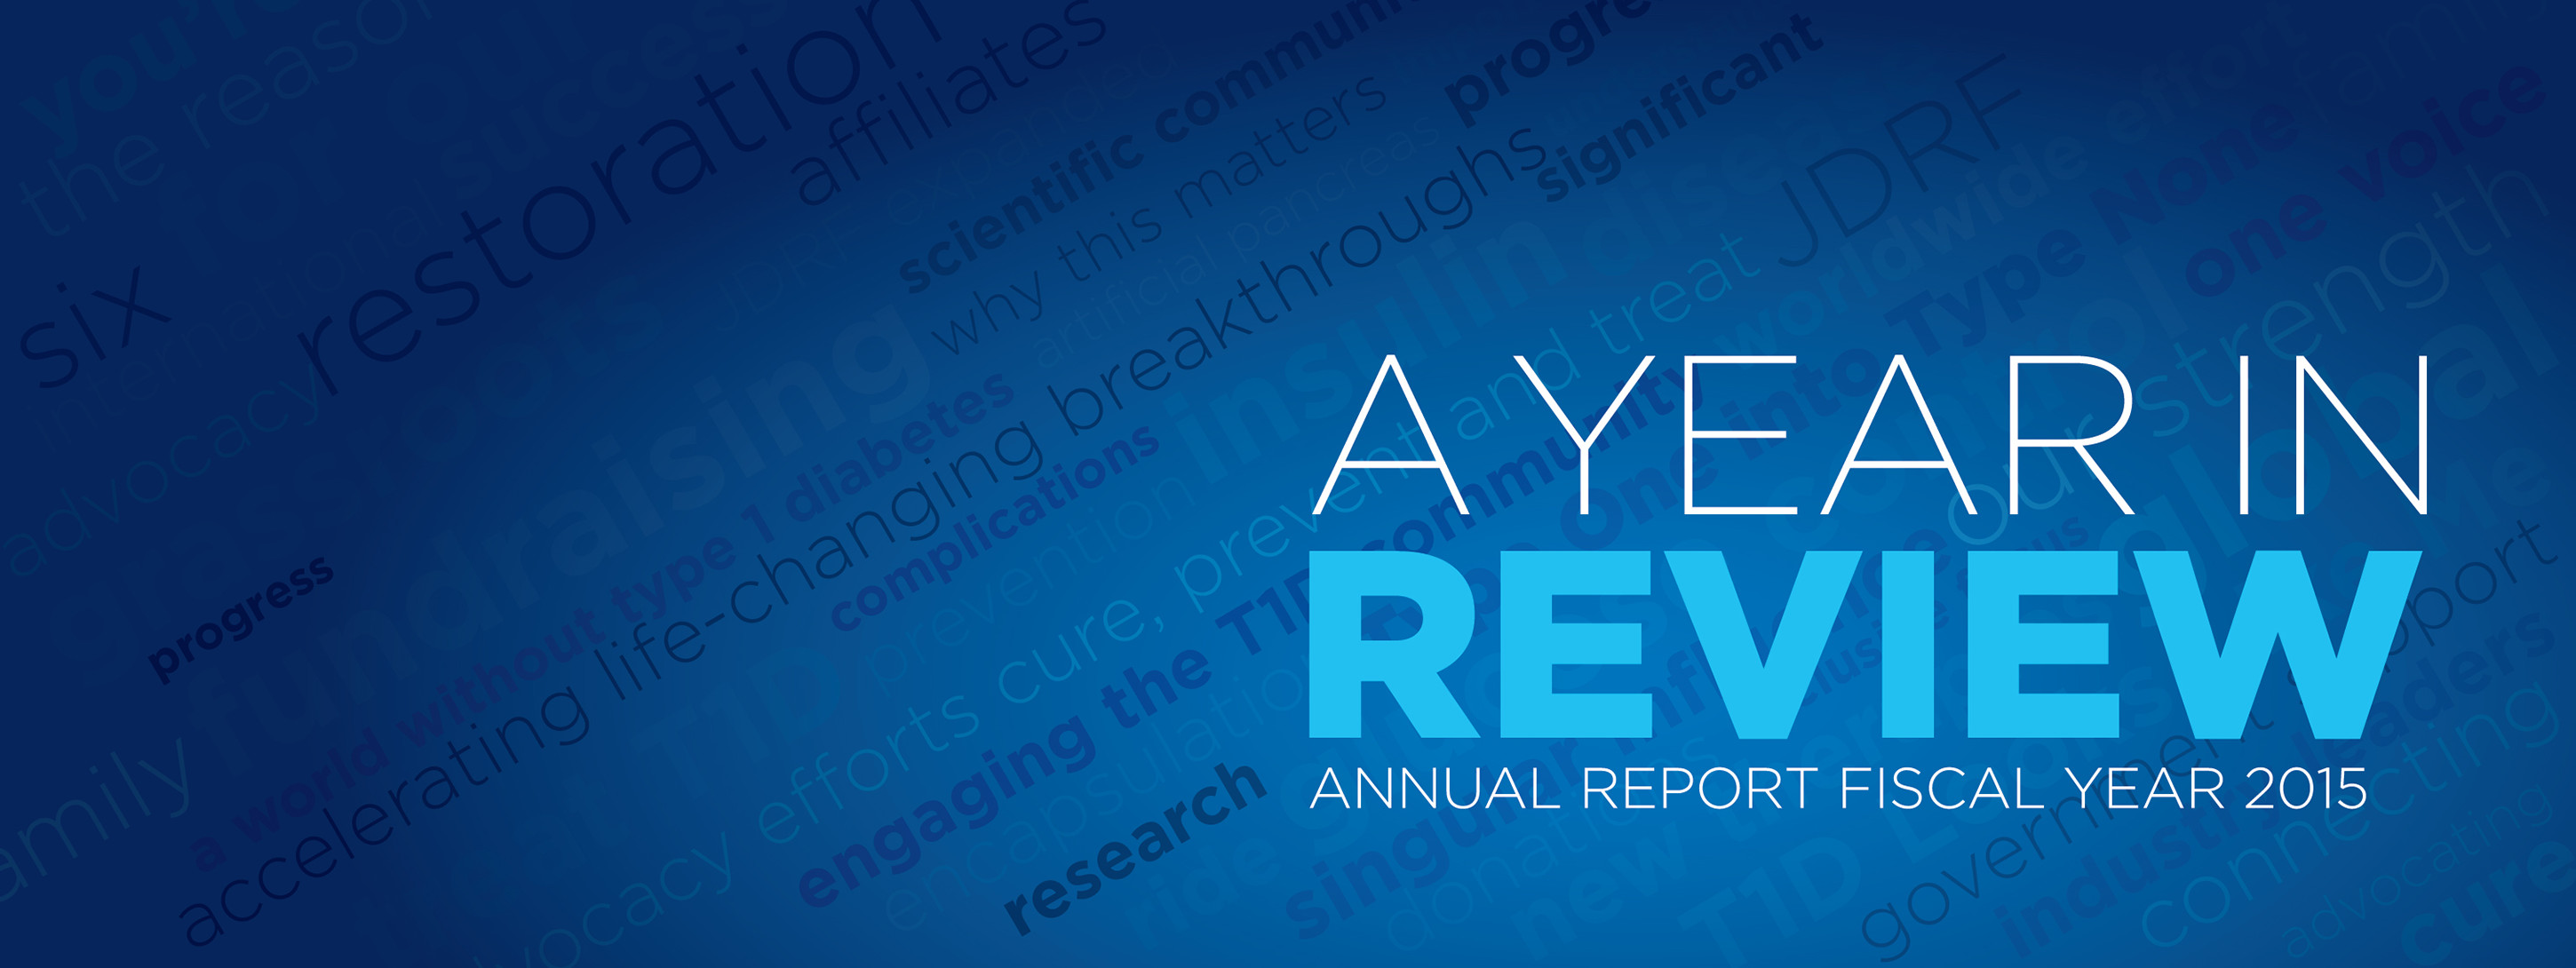 2015 Annual Report Cover 2900x1090